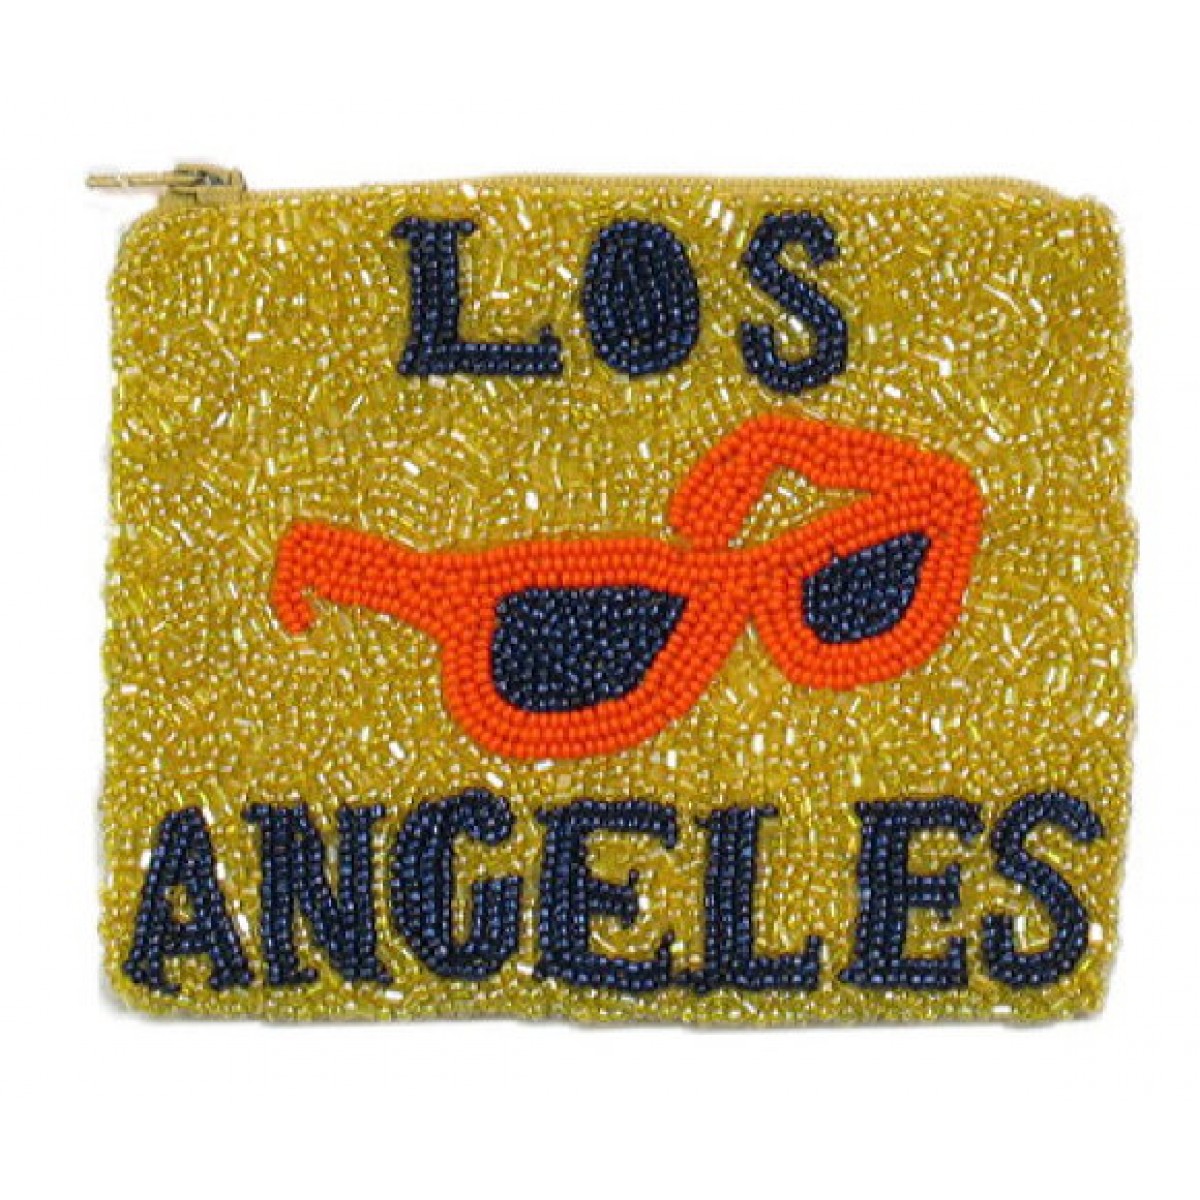 Zipper Pouch Los Angeles Logo